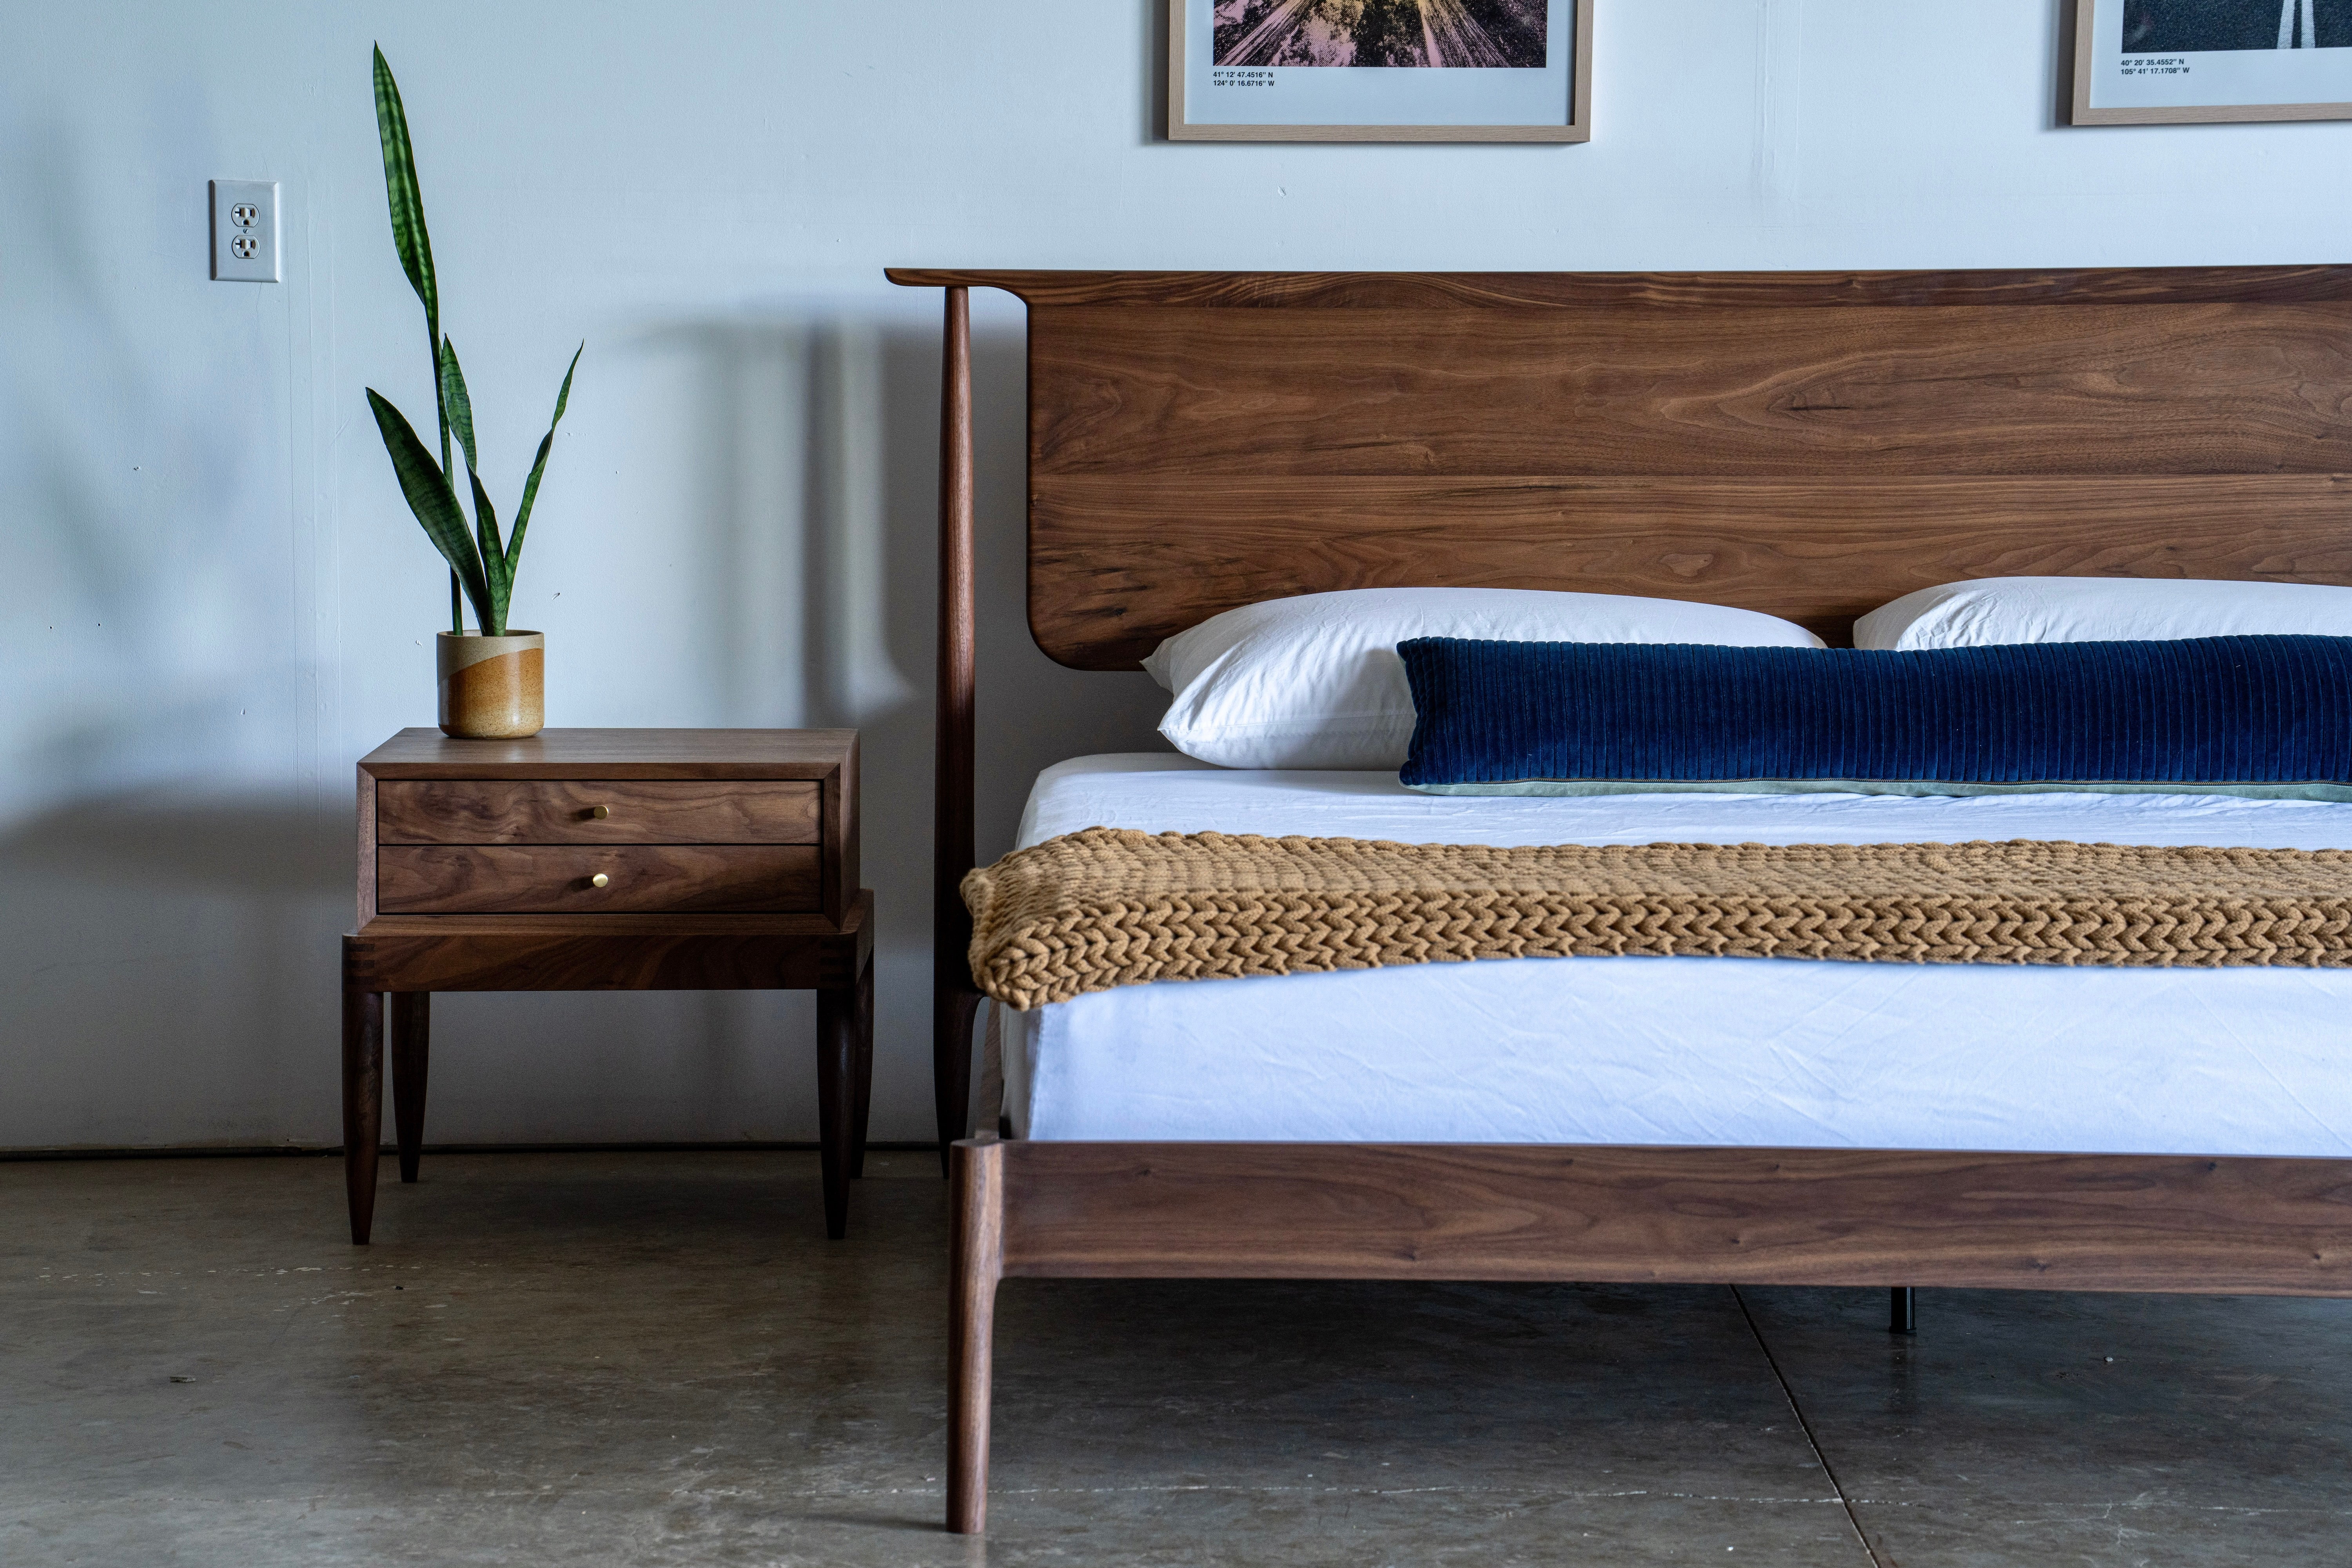 Mid century Modern Solid Wood Platform Bed